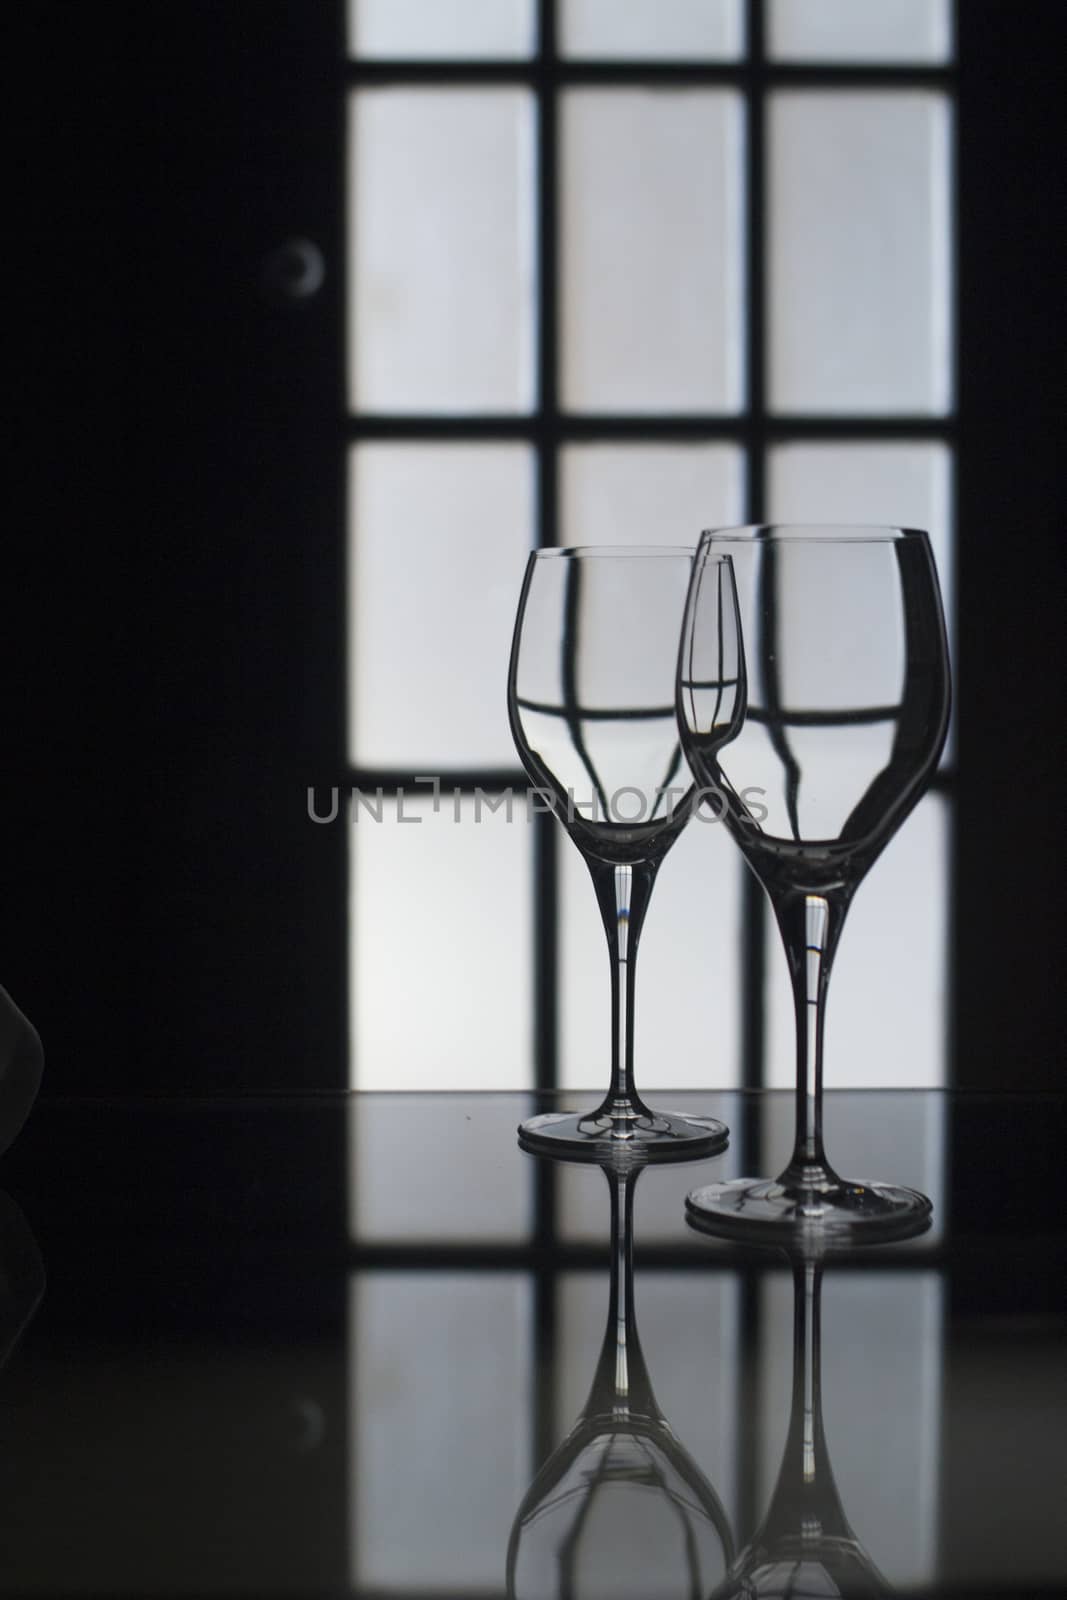 Wine glasses in dark room silhouette with door behind by edwardolive